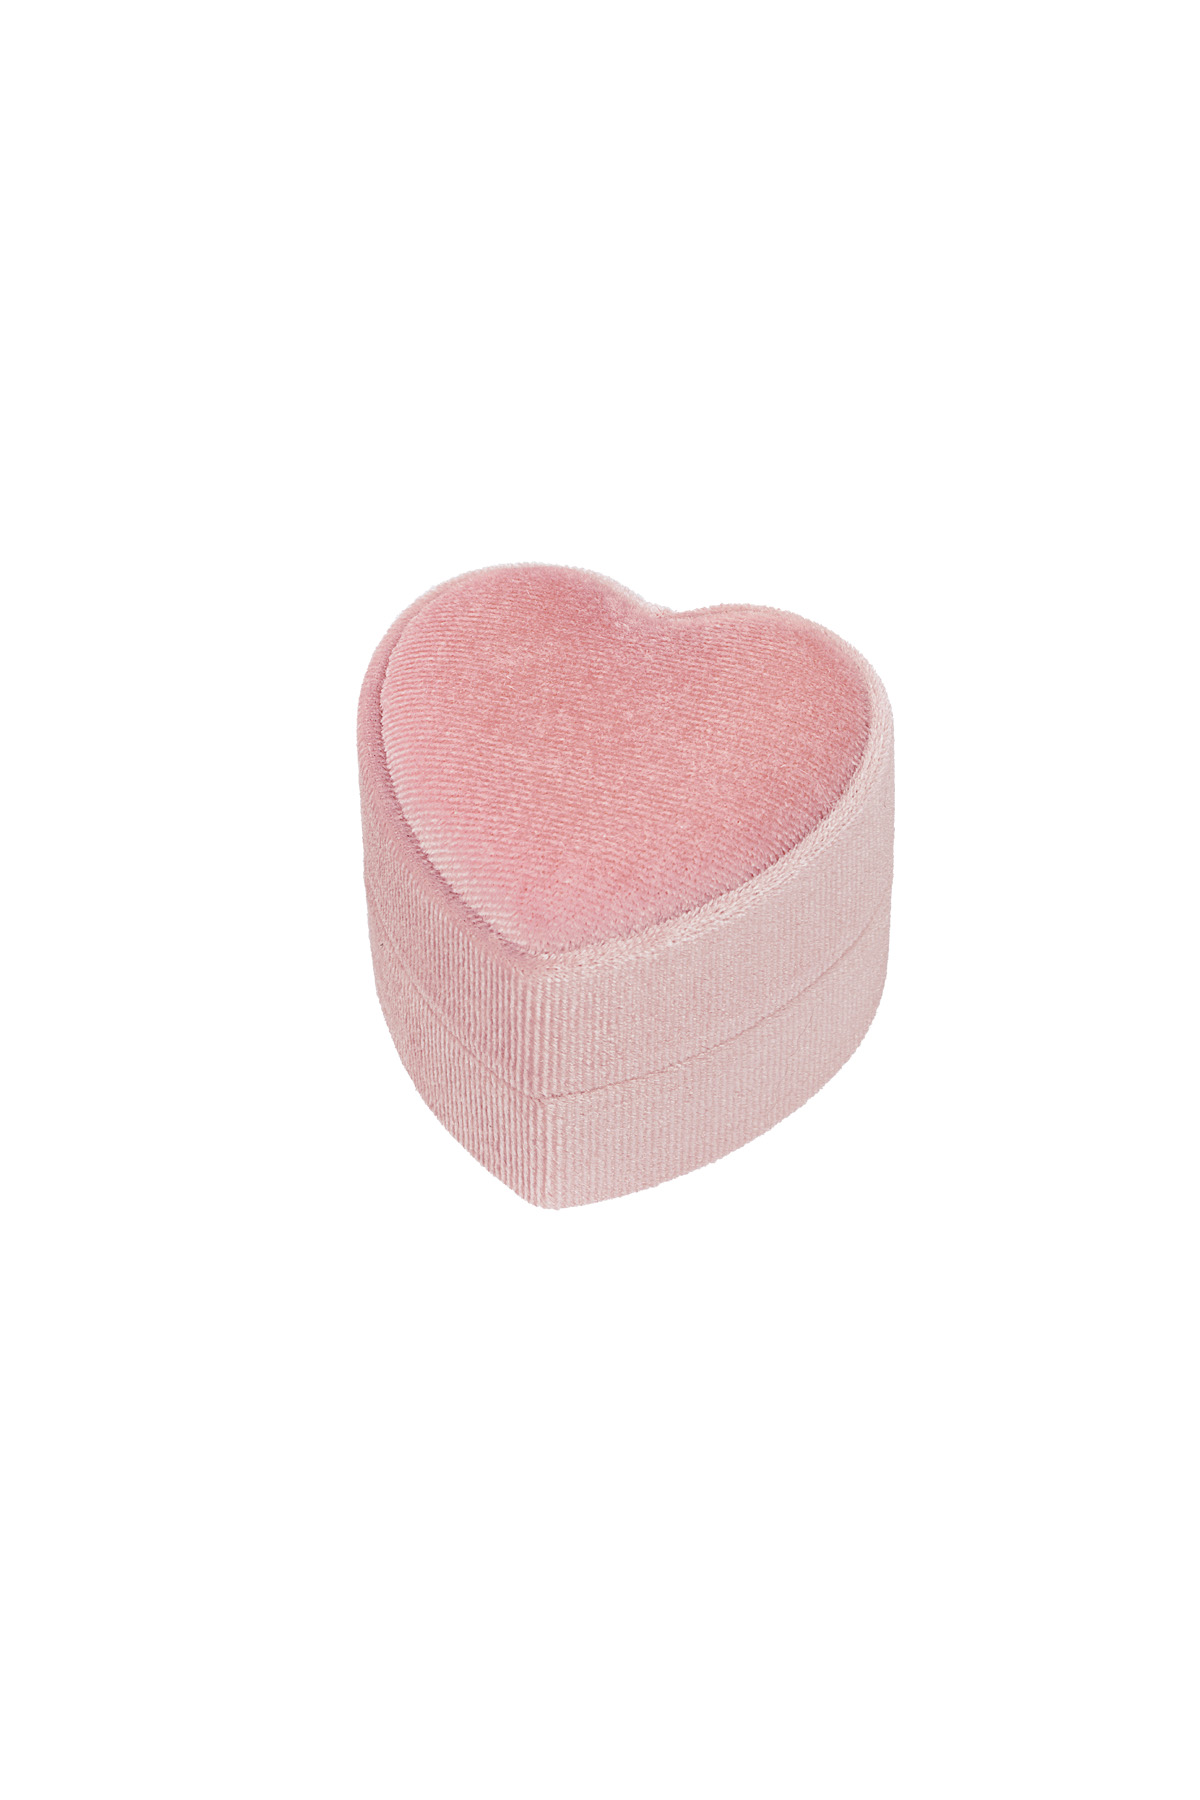 Jewelry box heart velvet - pink h5 